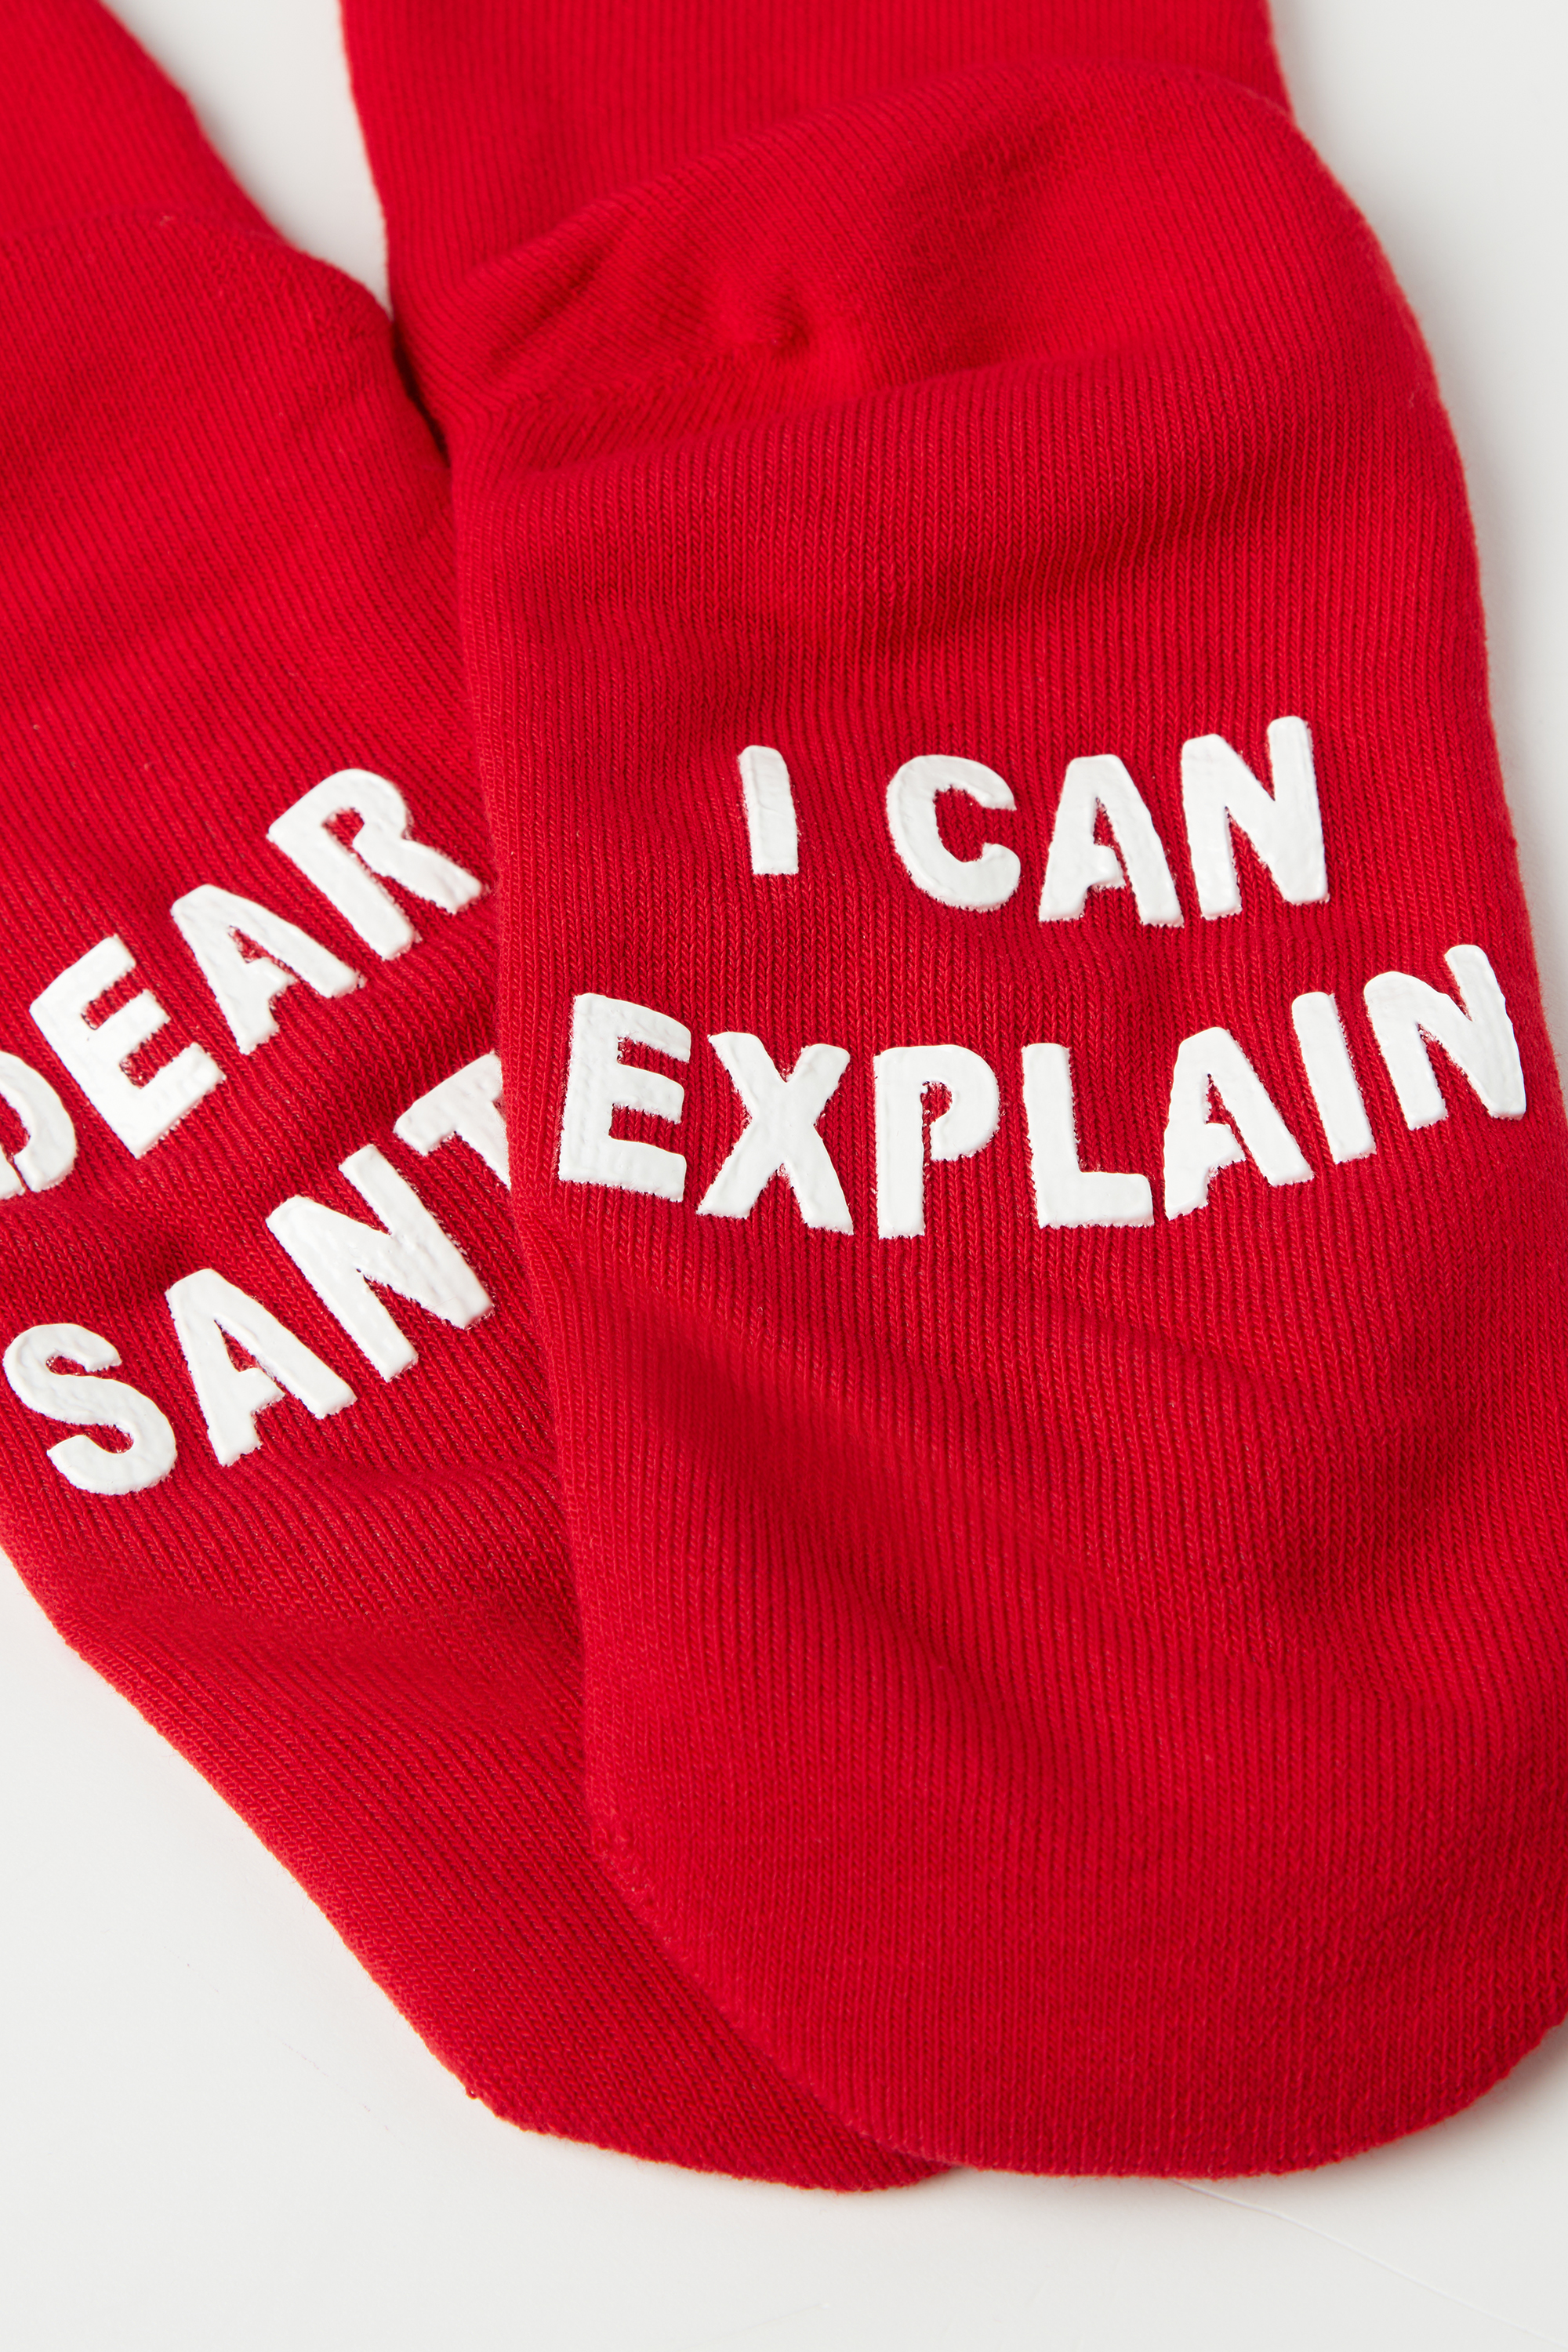 Men's Short Non-Slip Socks with "Dear Santa" Christmas Print